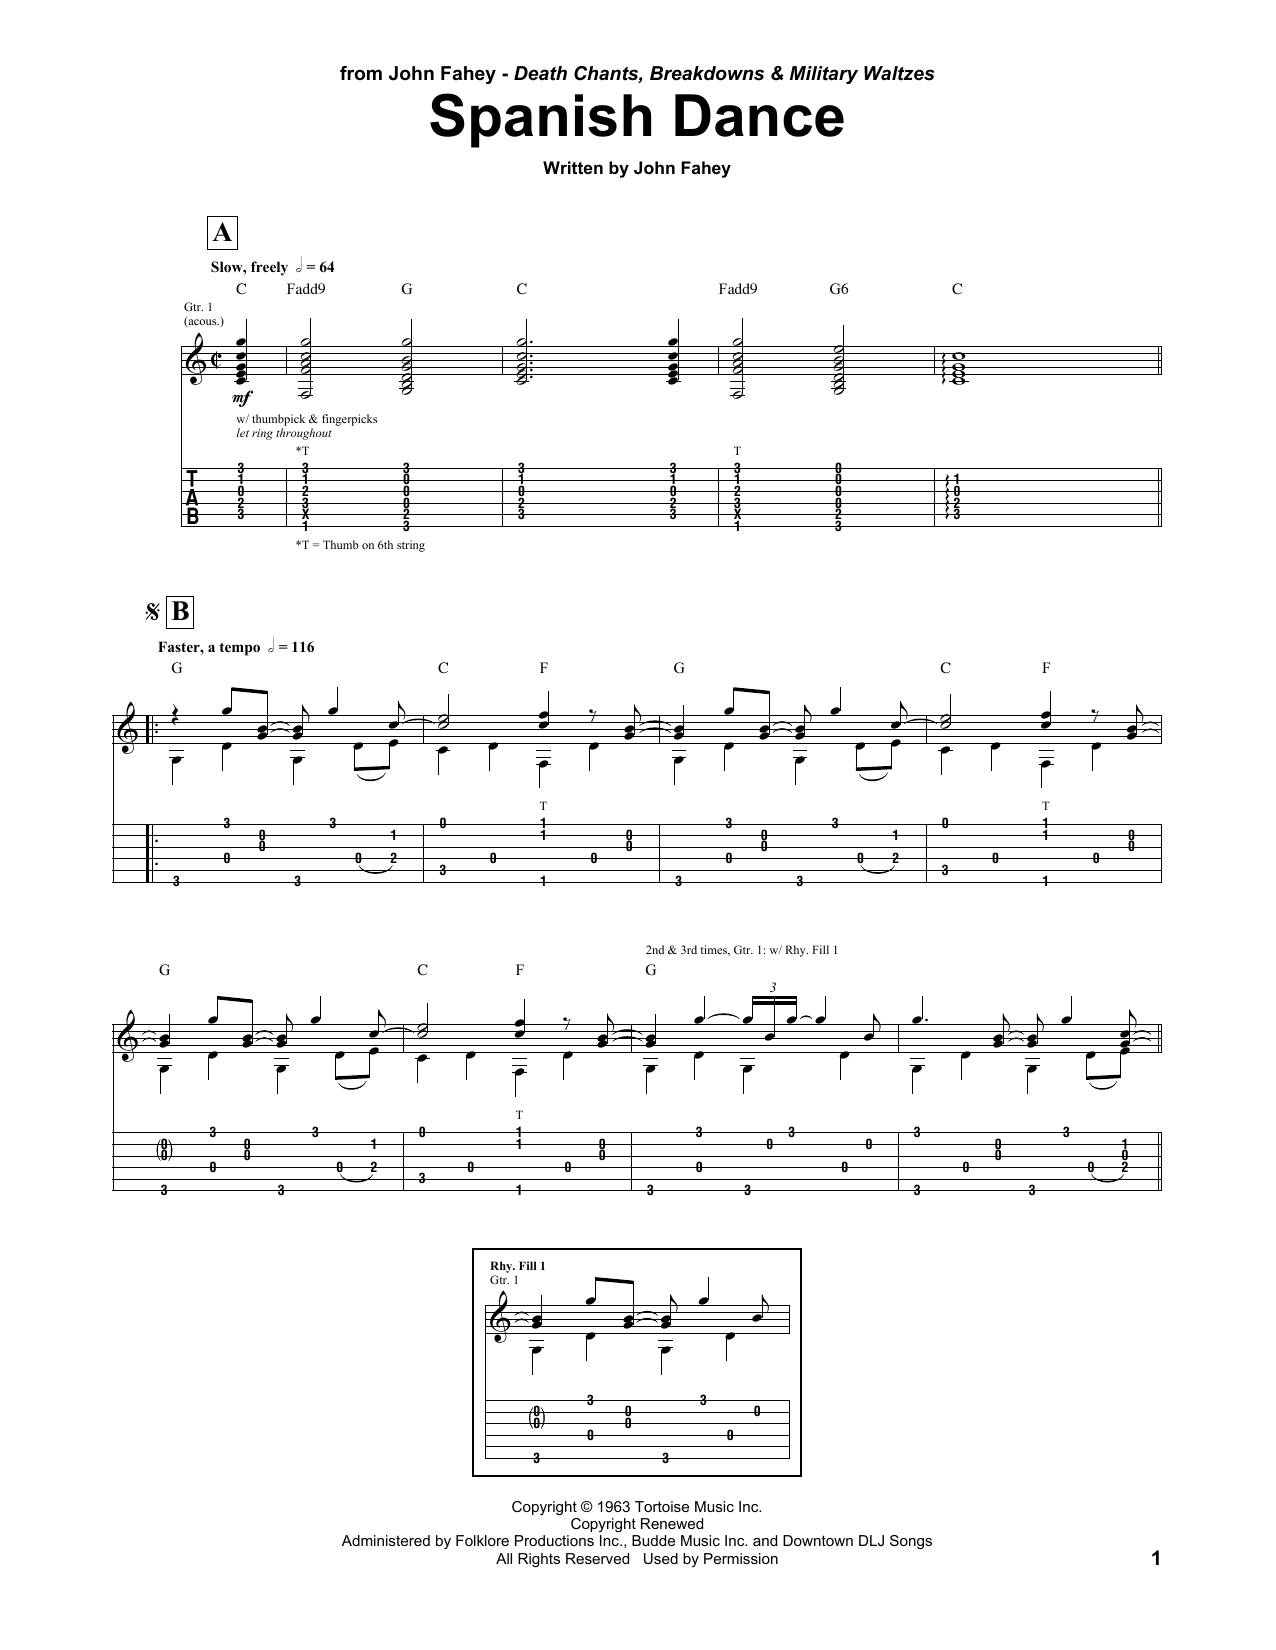 John Fahey Spanish Dance Sheet Music Notes & Chords for Guitar Tab - Download or Print PDF